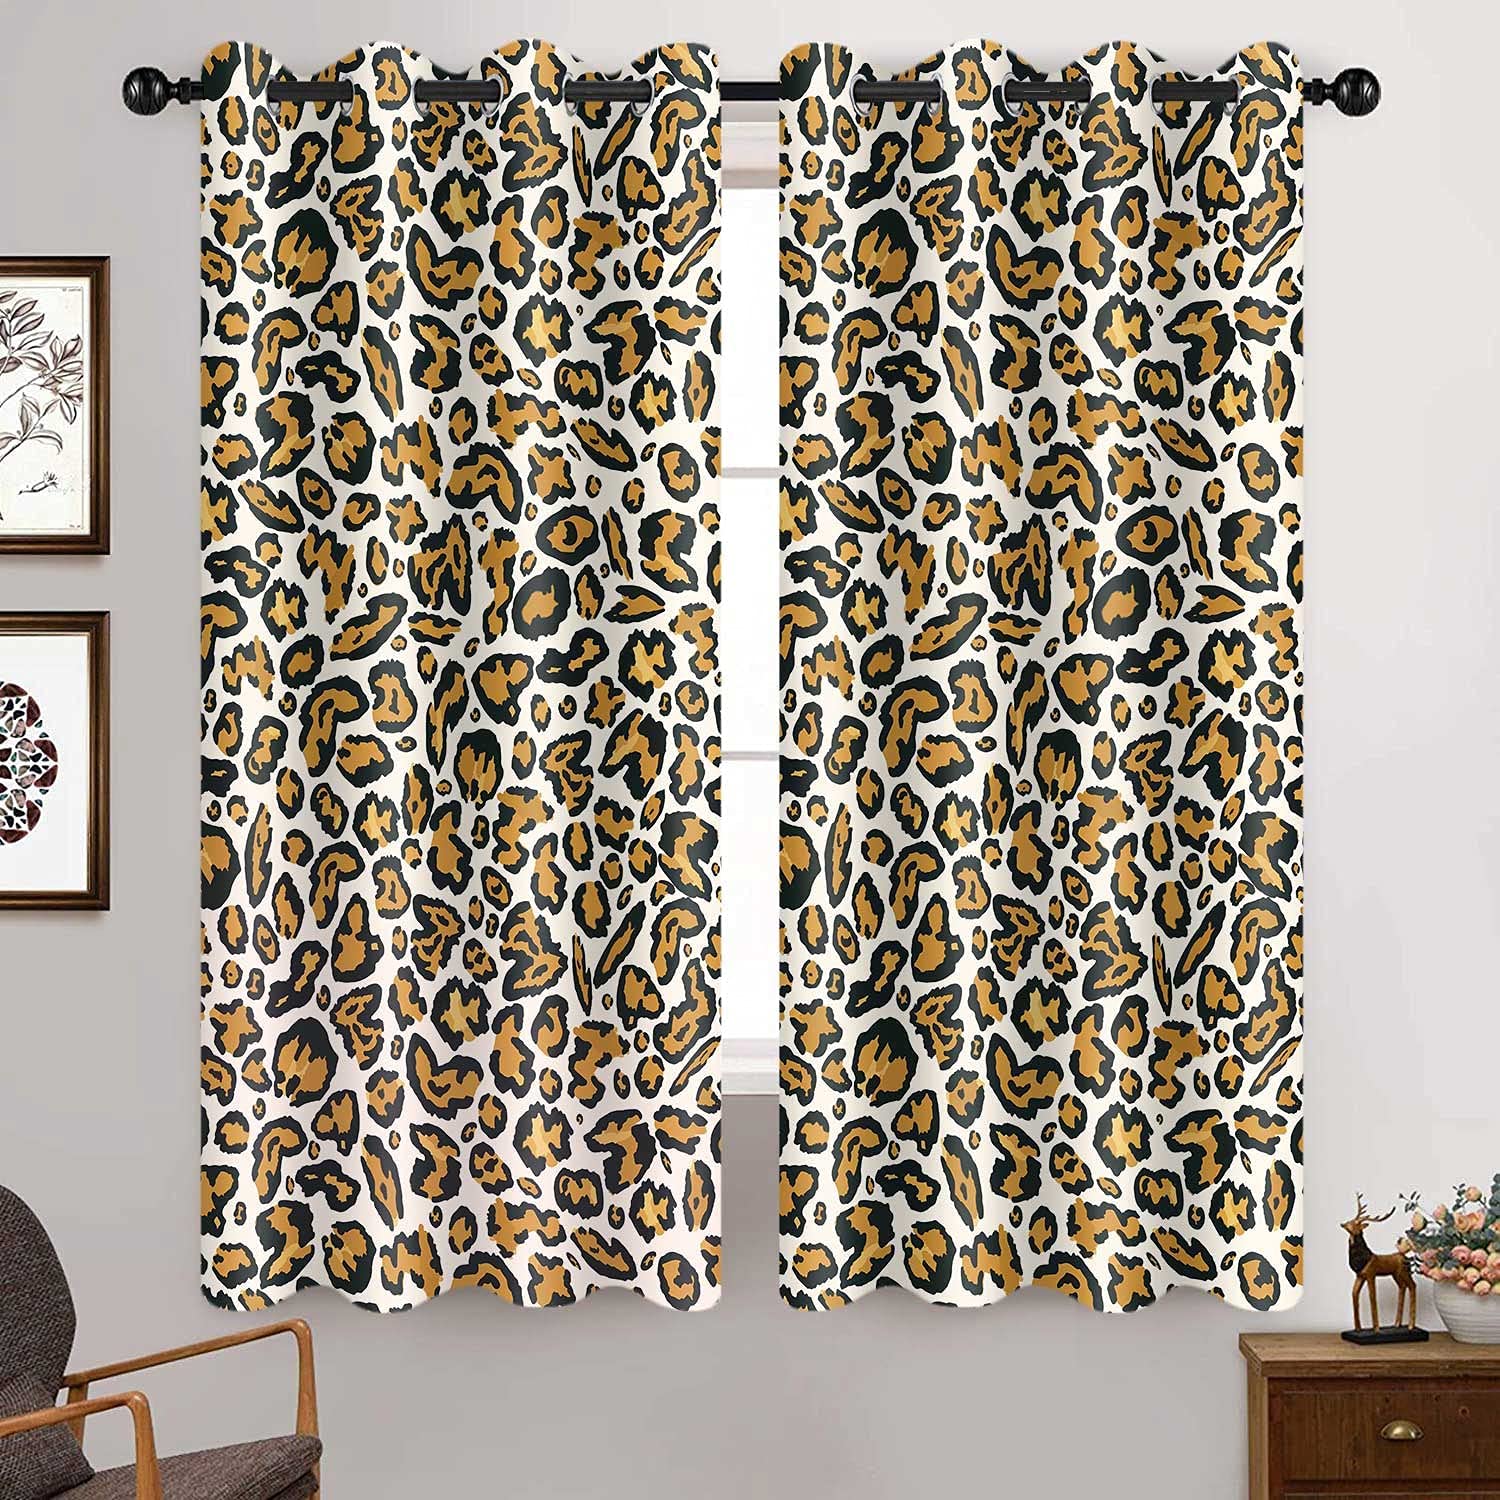 Leopard Print Curtains Wild Safari Animal Skin Pattern Art Printed Grommet  Window Drapes for Living Room Bedroom Window Treatment Panels 52x84  Inches CLZMAH28